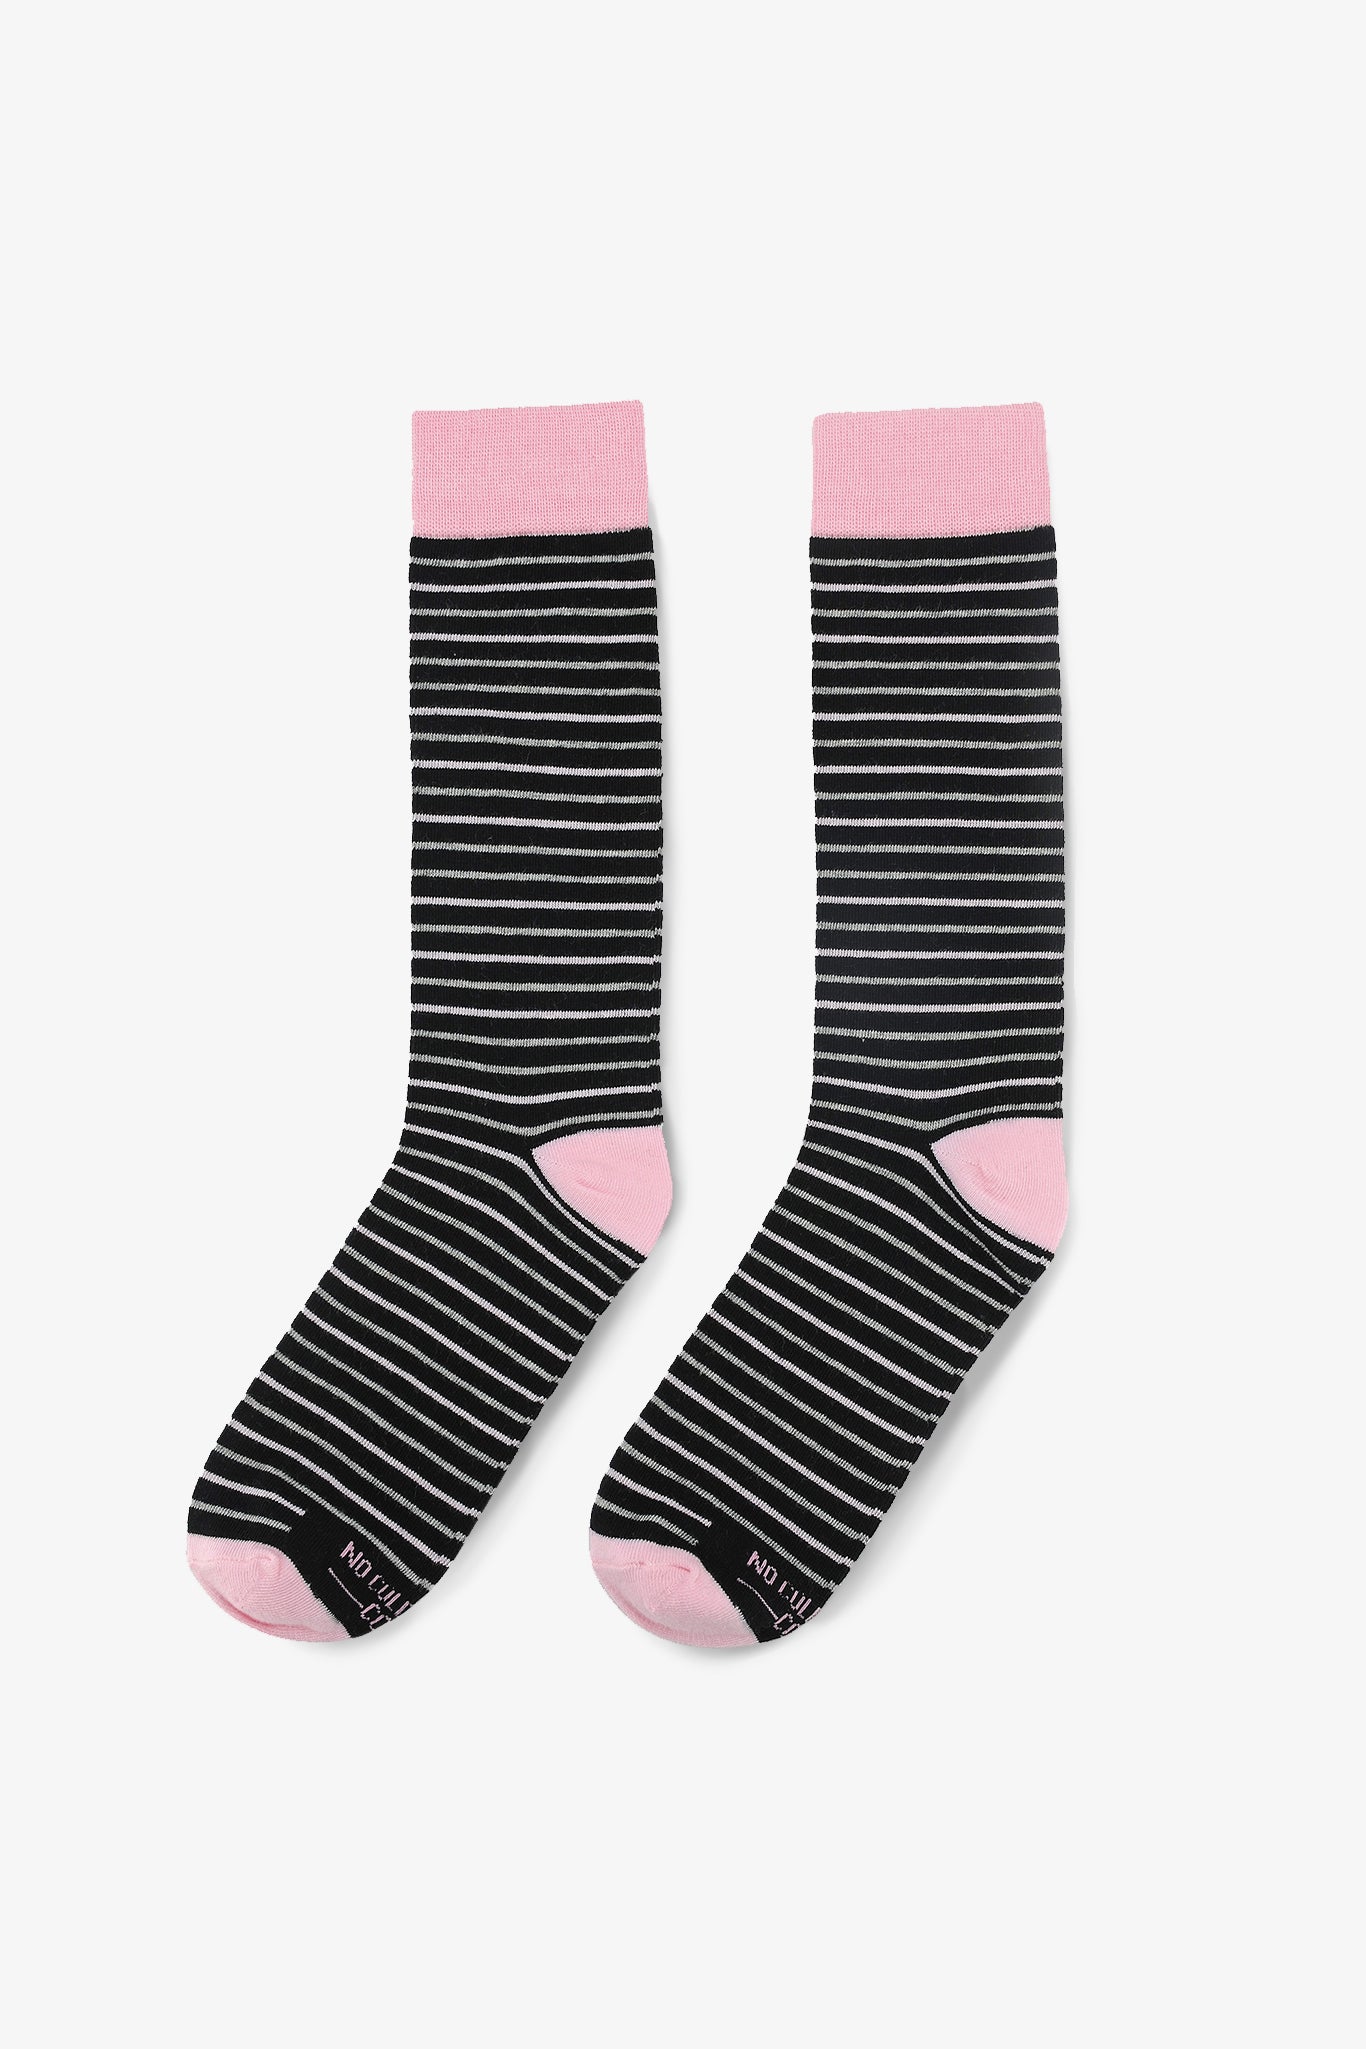 Striped Groomsmen Socks By No Cold Feet - Pink